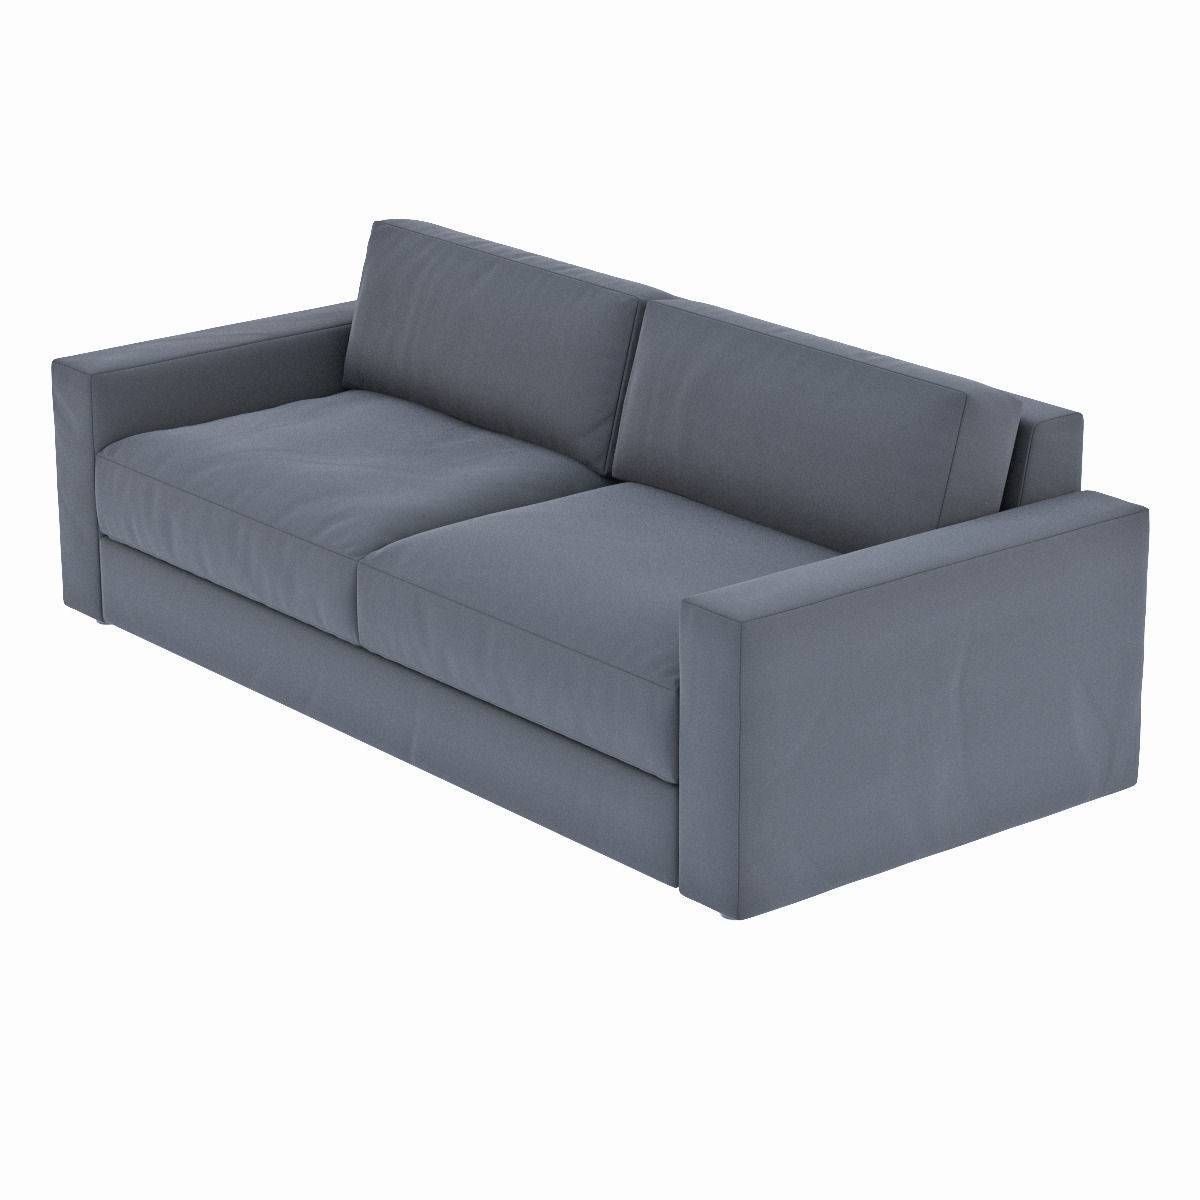 West Elm Urban Sofa 3d Model | Cgtrader Regarding West Elm Henry Sofas (View 14 of 15)